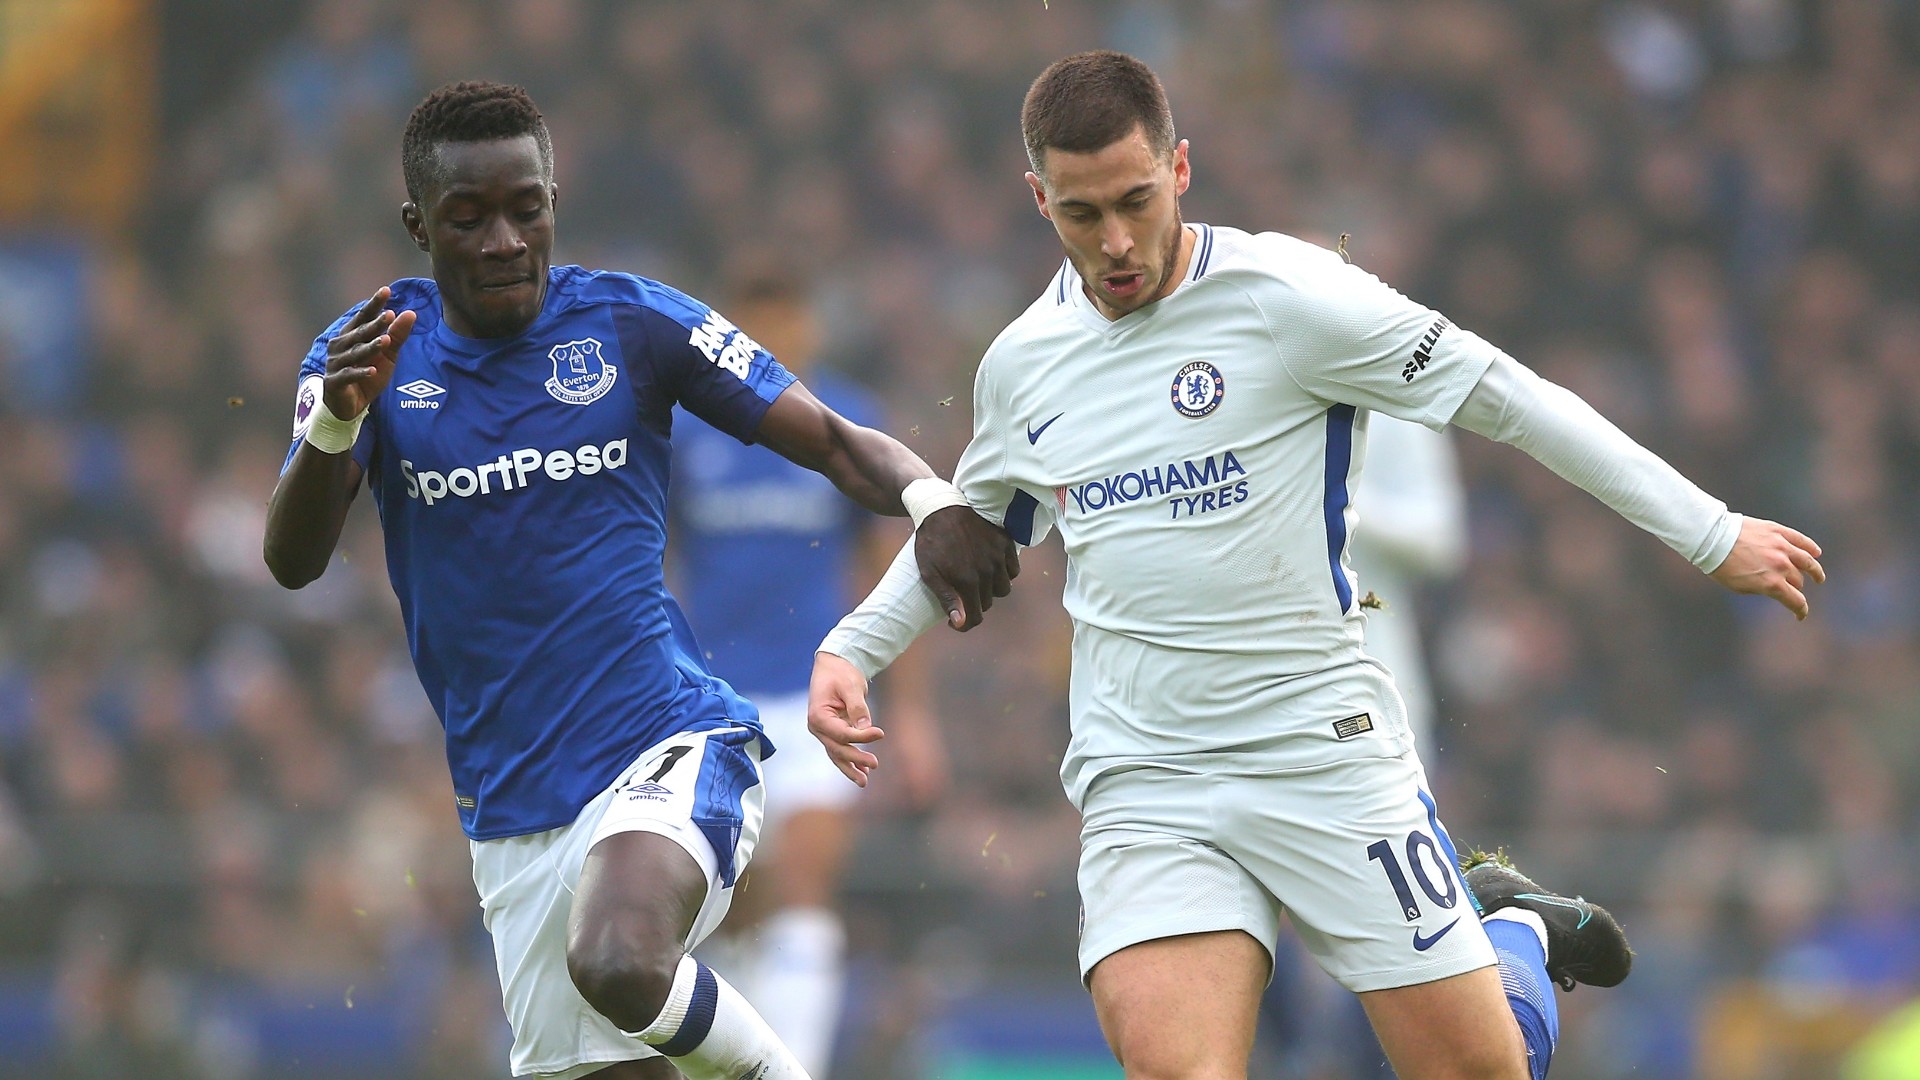 1920x1080, Idrissa Gana Gueye, Eden Hazard, Everton - Everton Vs Chelsea 2018 - HD Wallpaper 